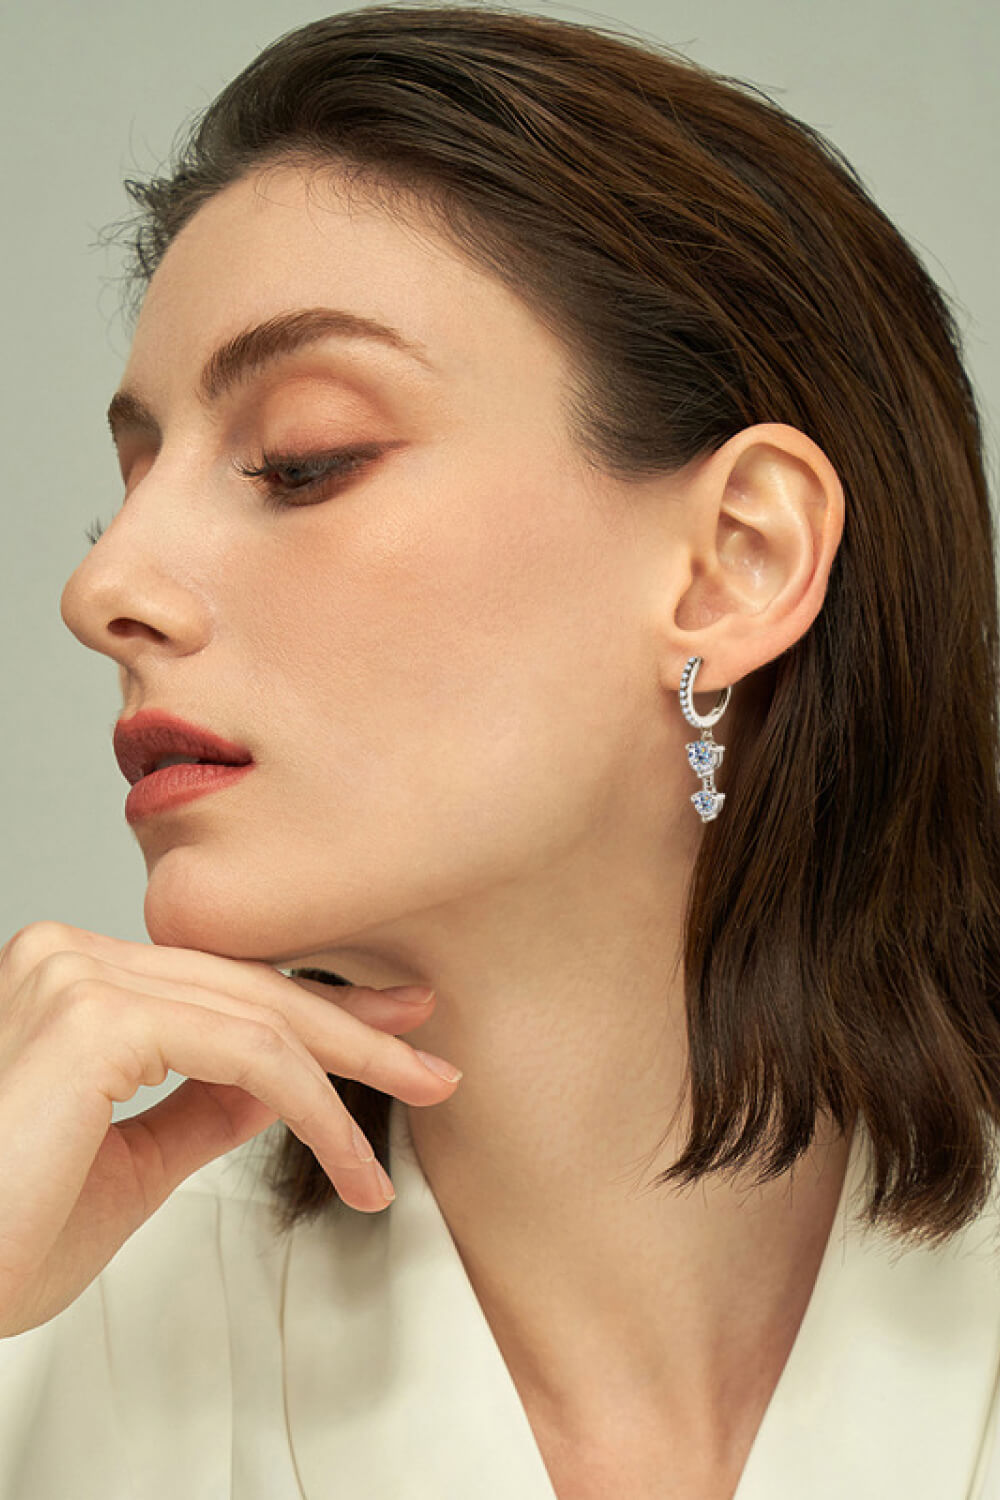 Be The One Moissanite Drop Earrings - Shop women apparel, Jewelry, bath & beauty products online - Arwen's Boutique